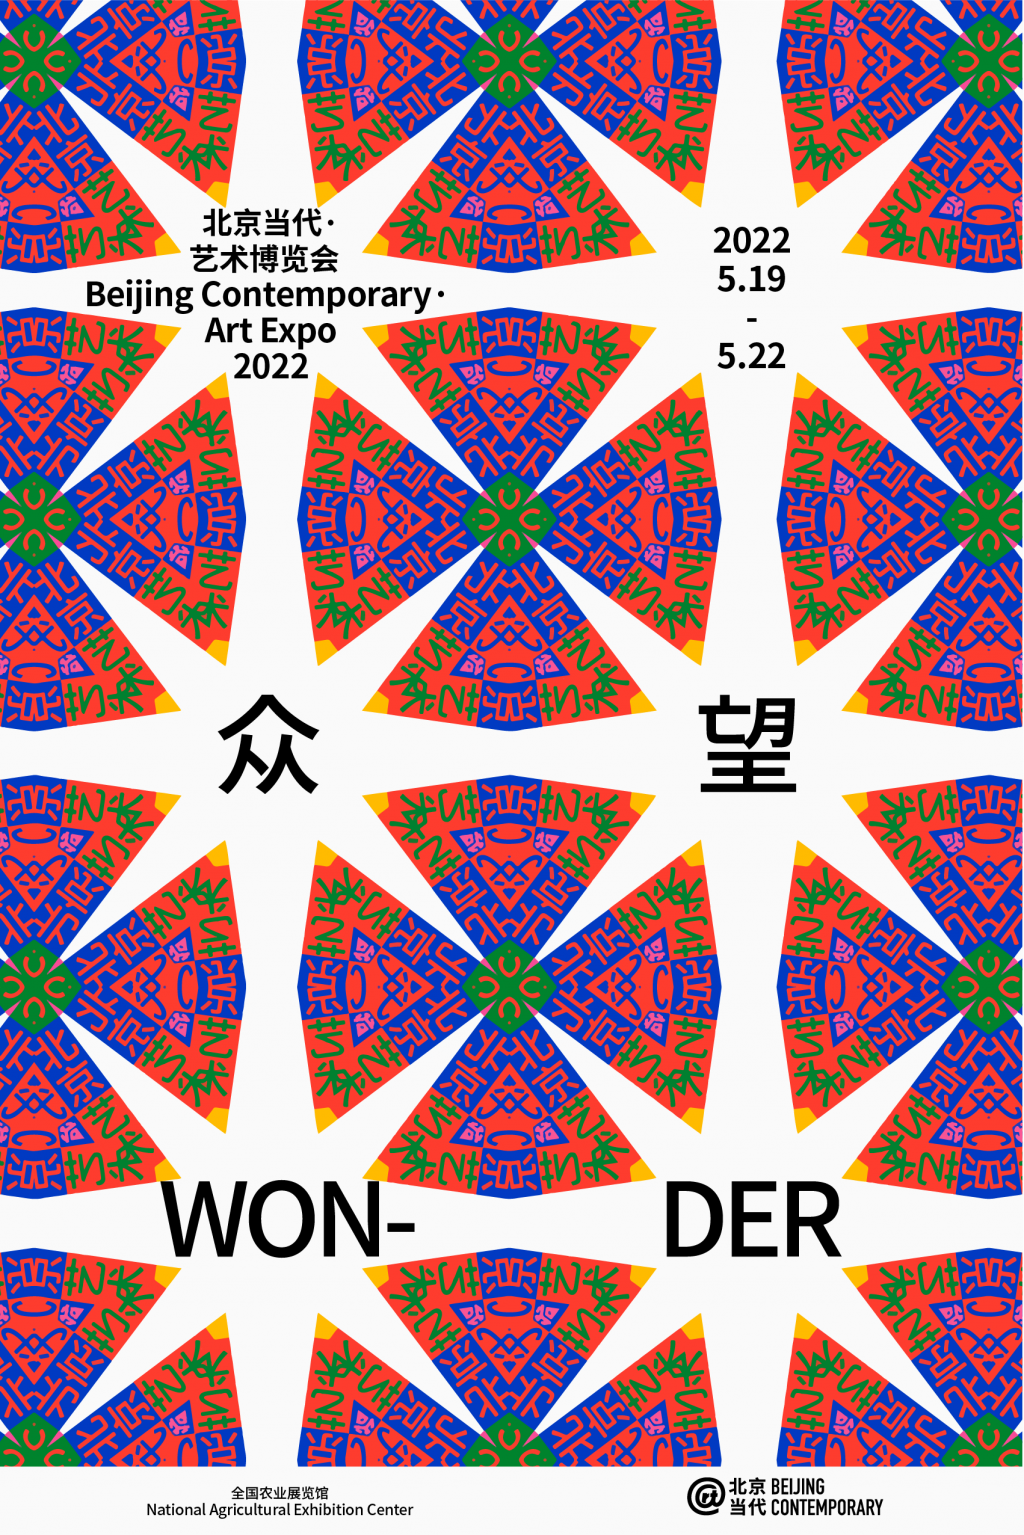 Beijing Contemporary Art Expo · WONDER,2022